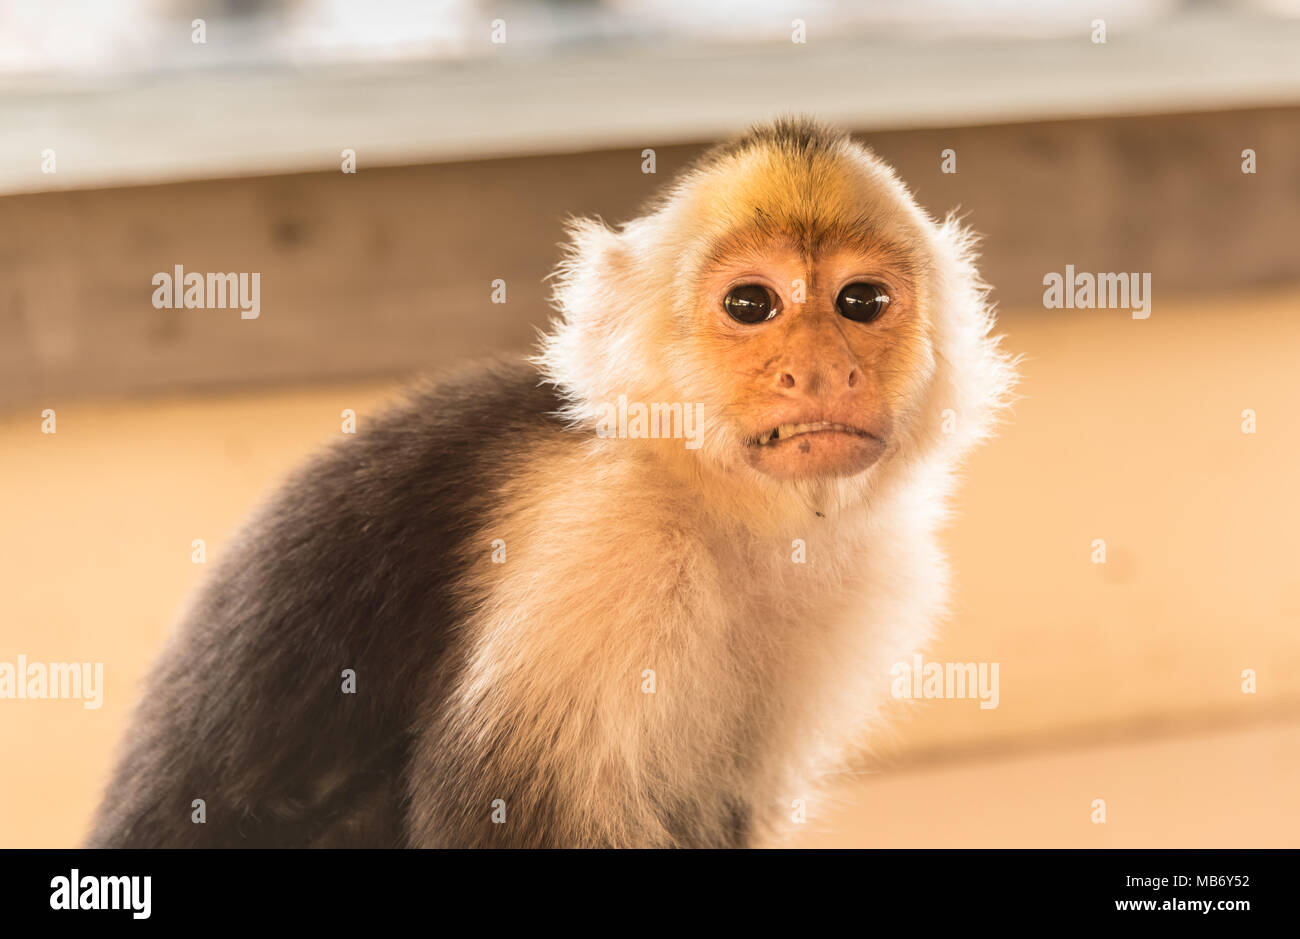 Cute Capuchin Monkey Looking At Camera Stock Photo